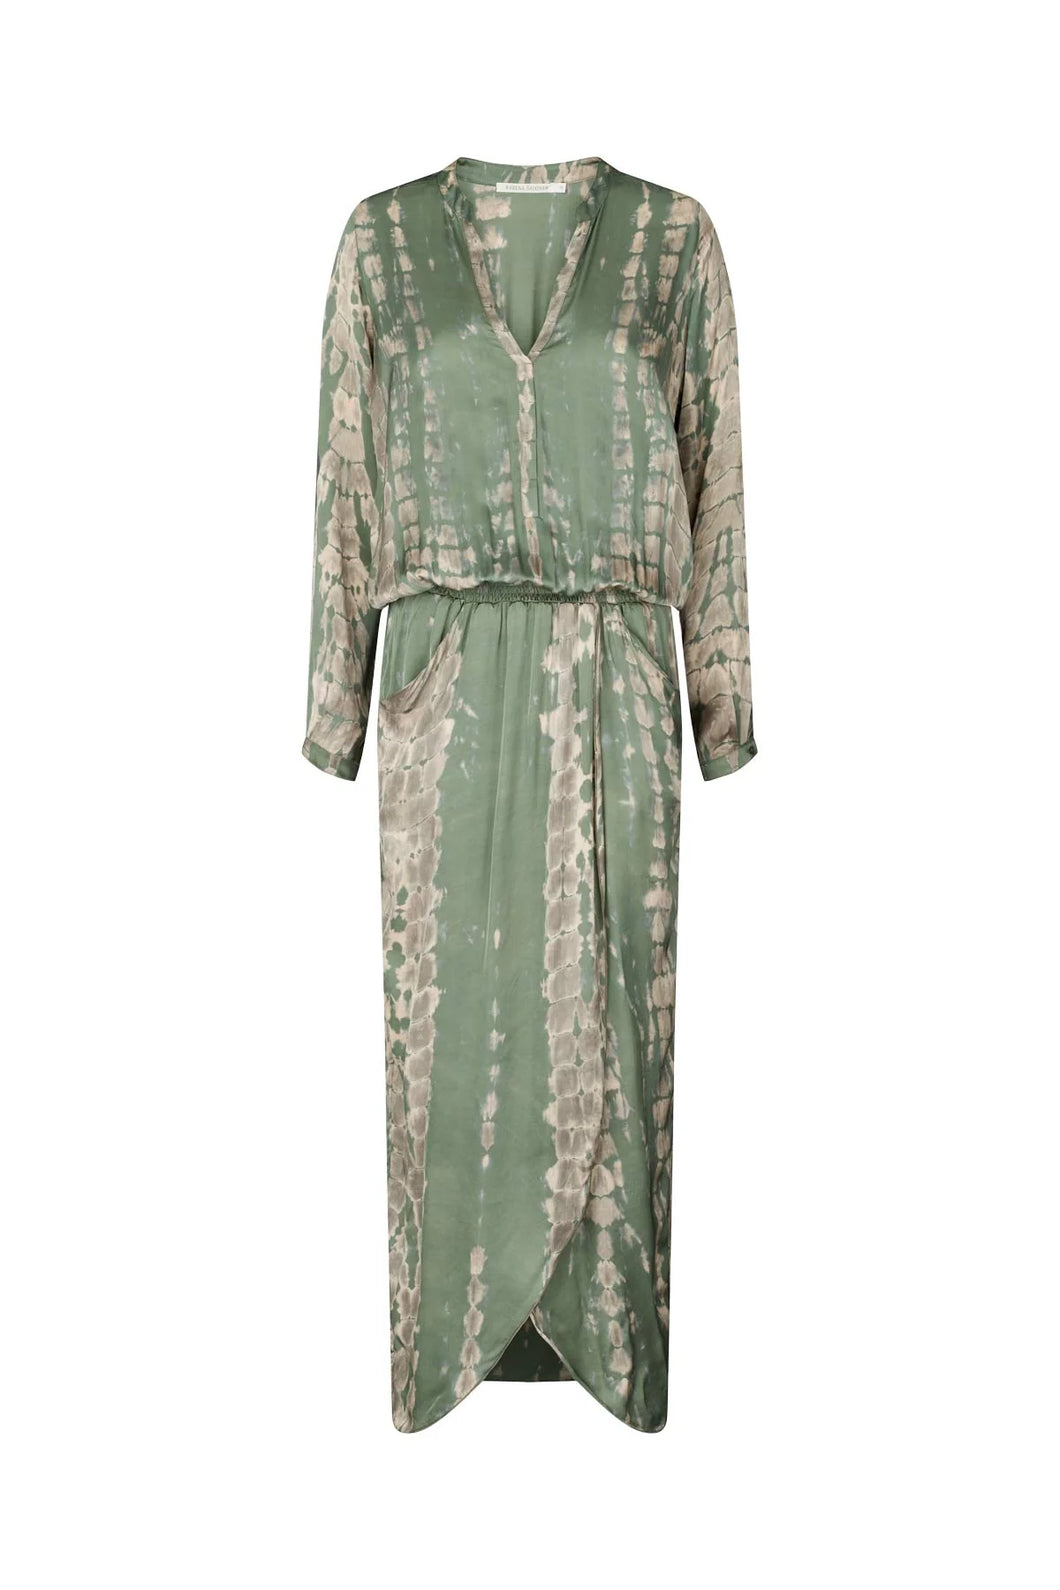 Rabens Saloner Vera Bamboo Dress Mist Combo W24181106